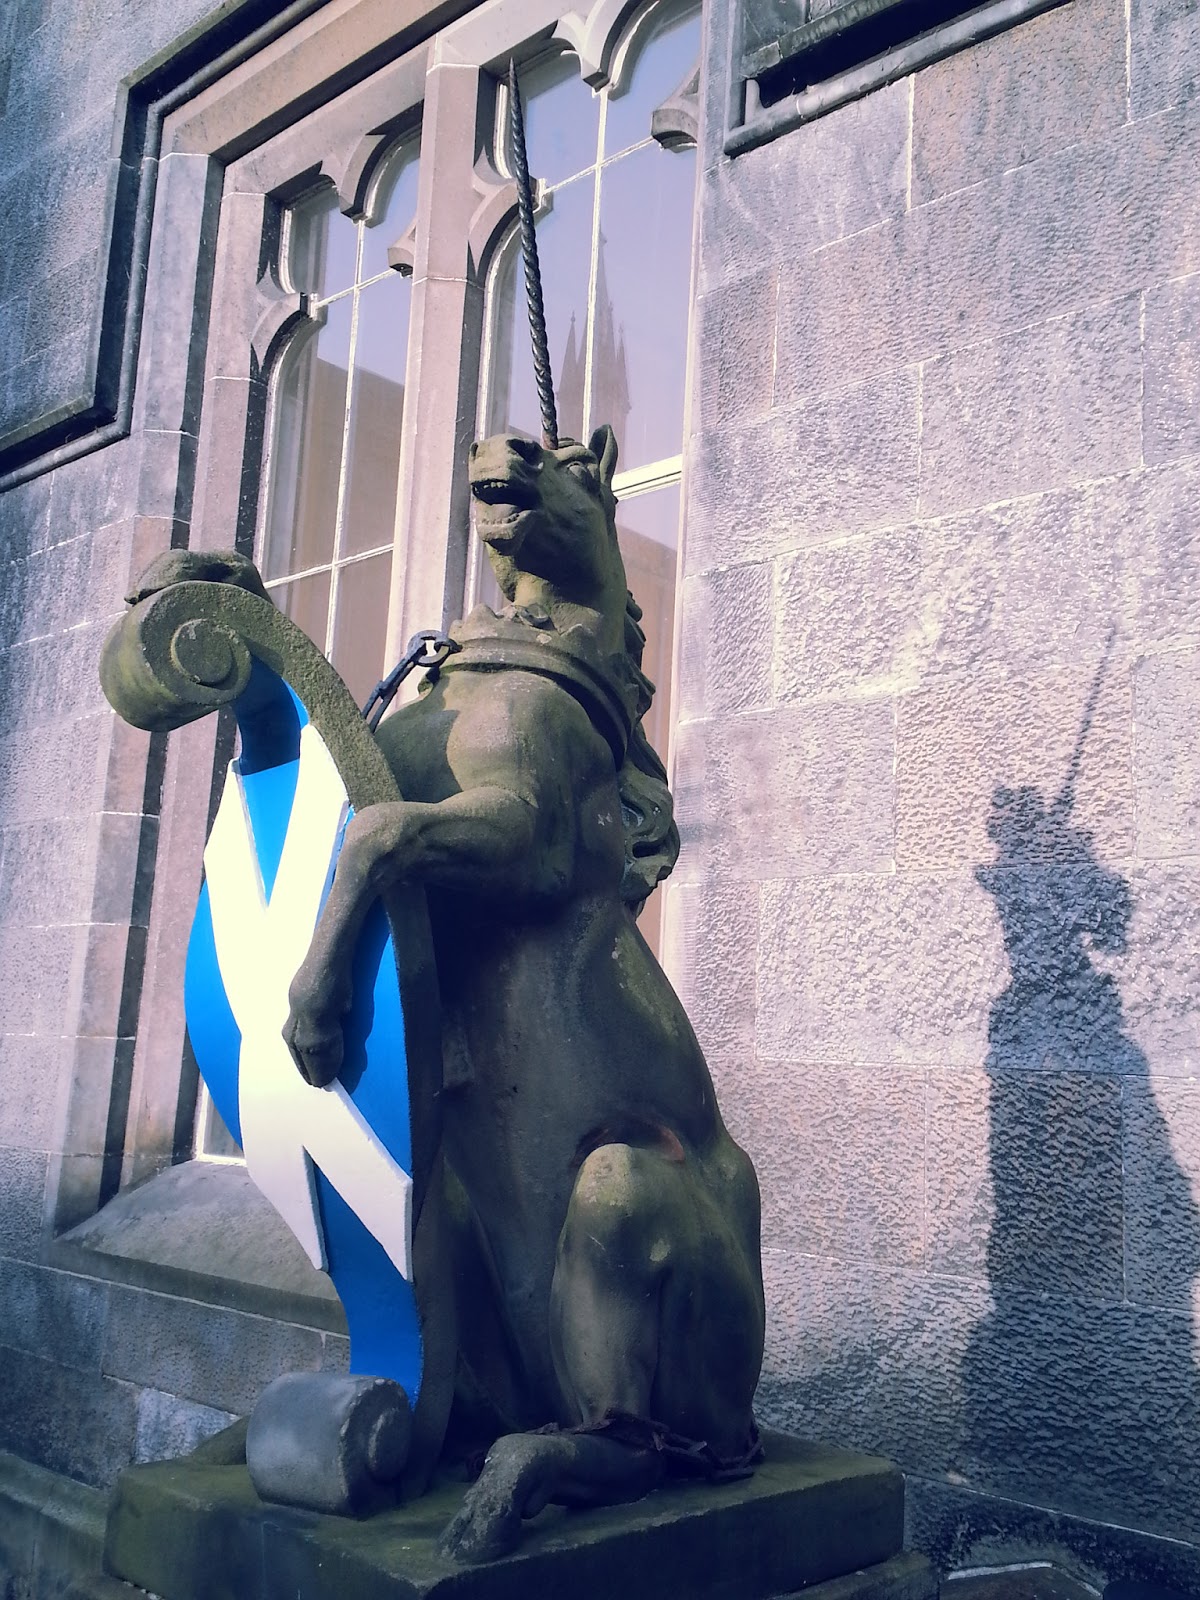 National Animal Of Scotland